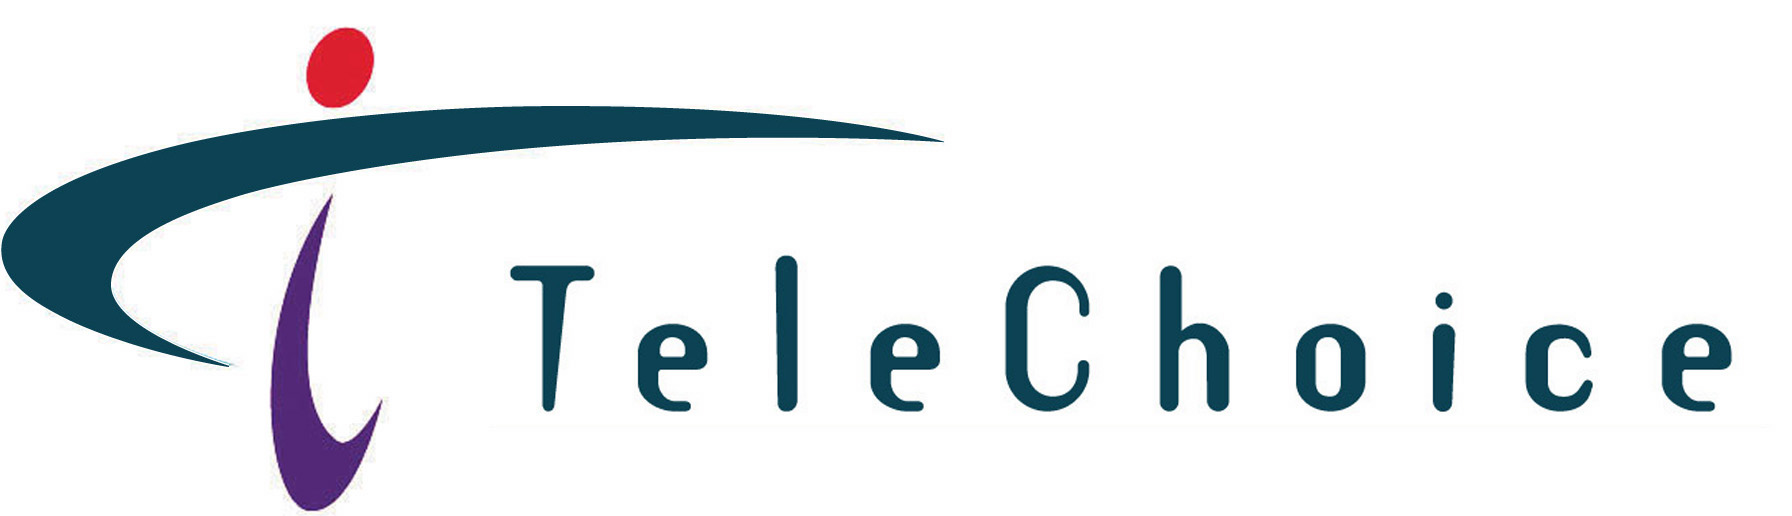 Telechoice International Limited company logo